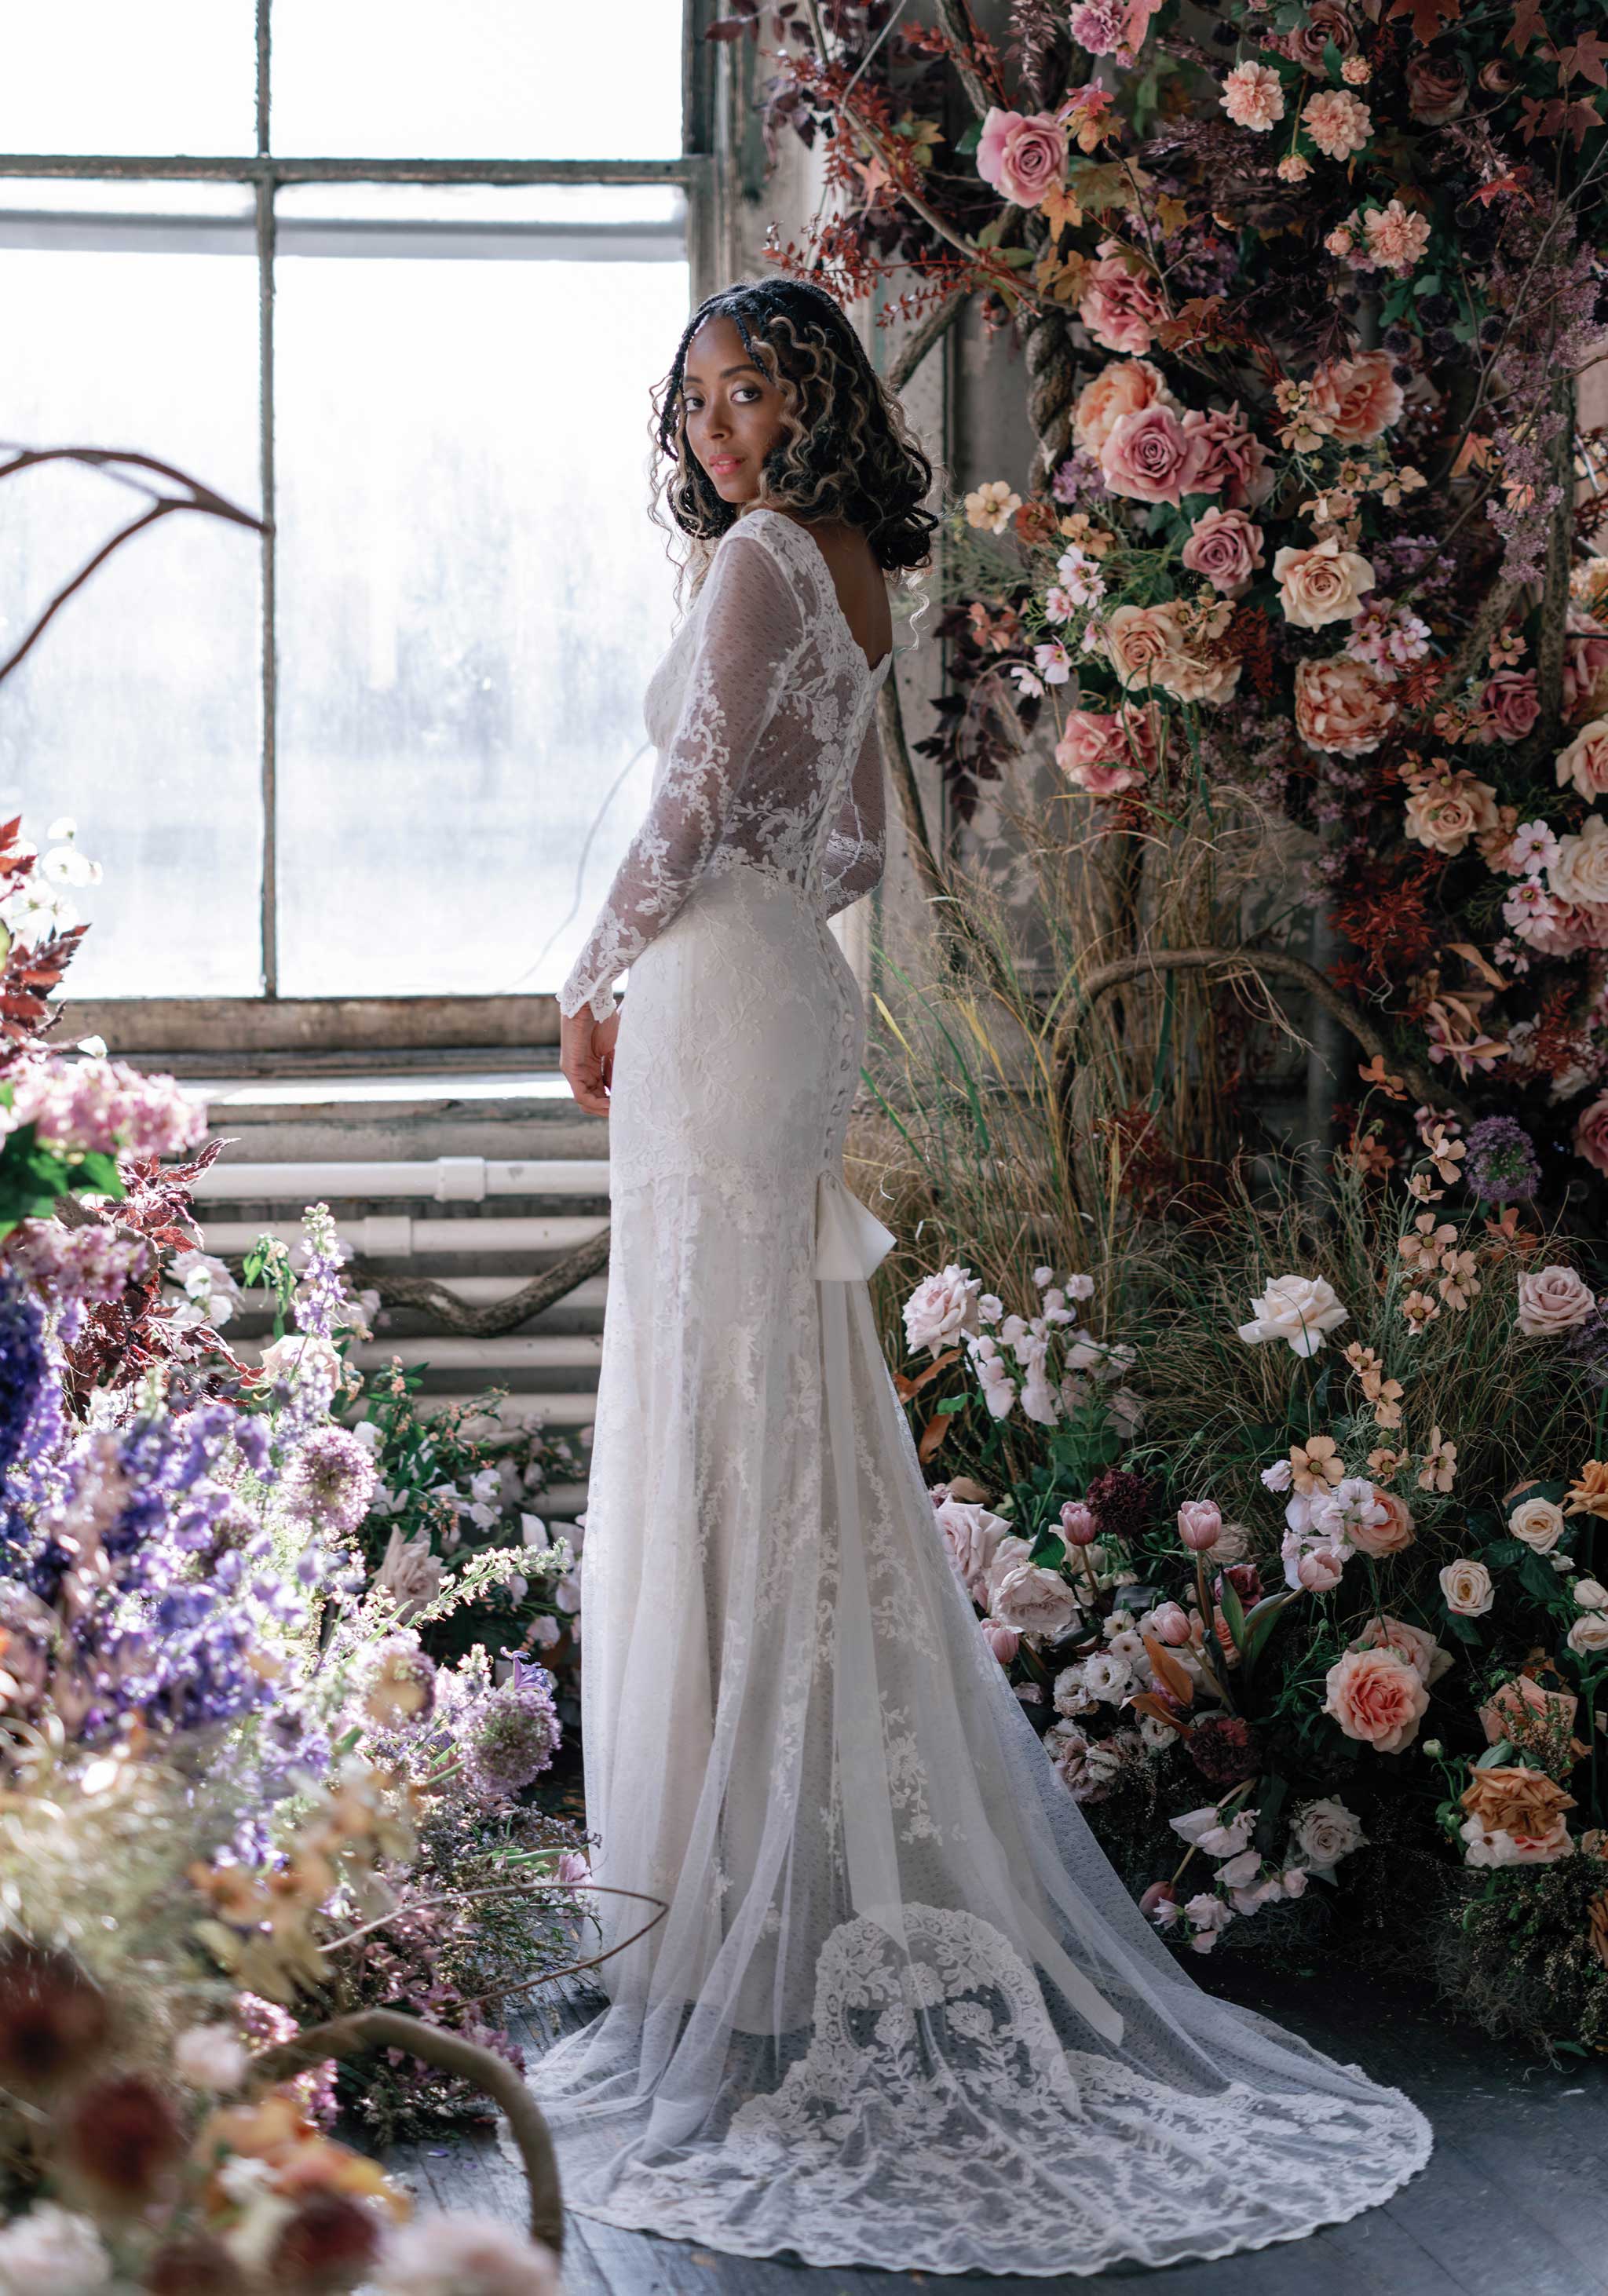 Arabesque Lace Wedding Dress Sheath by Claire Pettibone